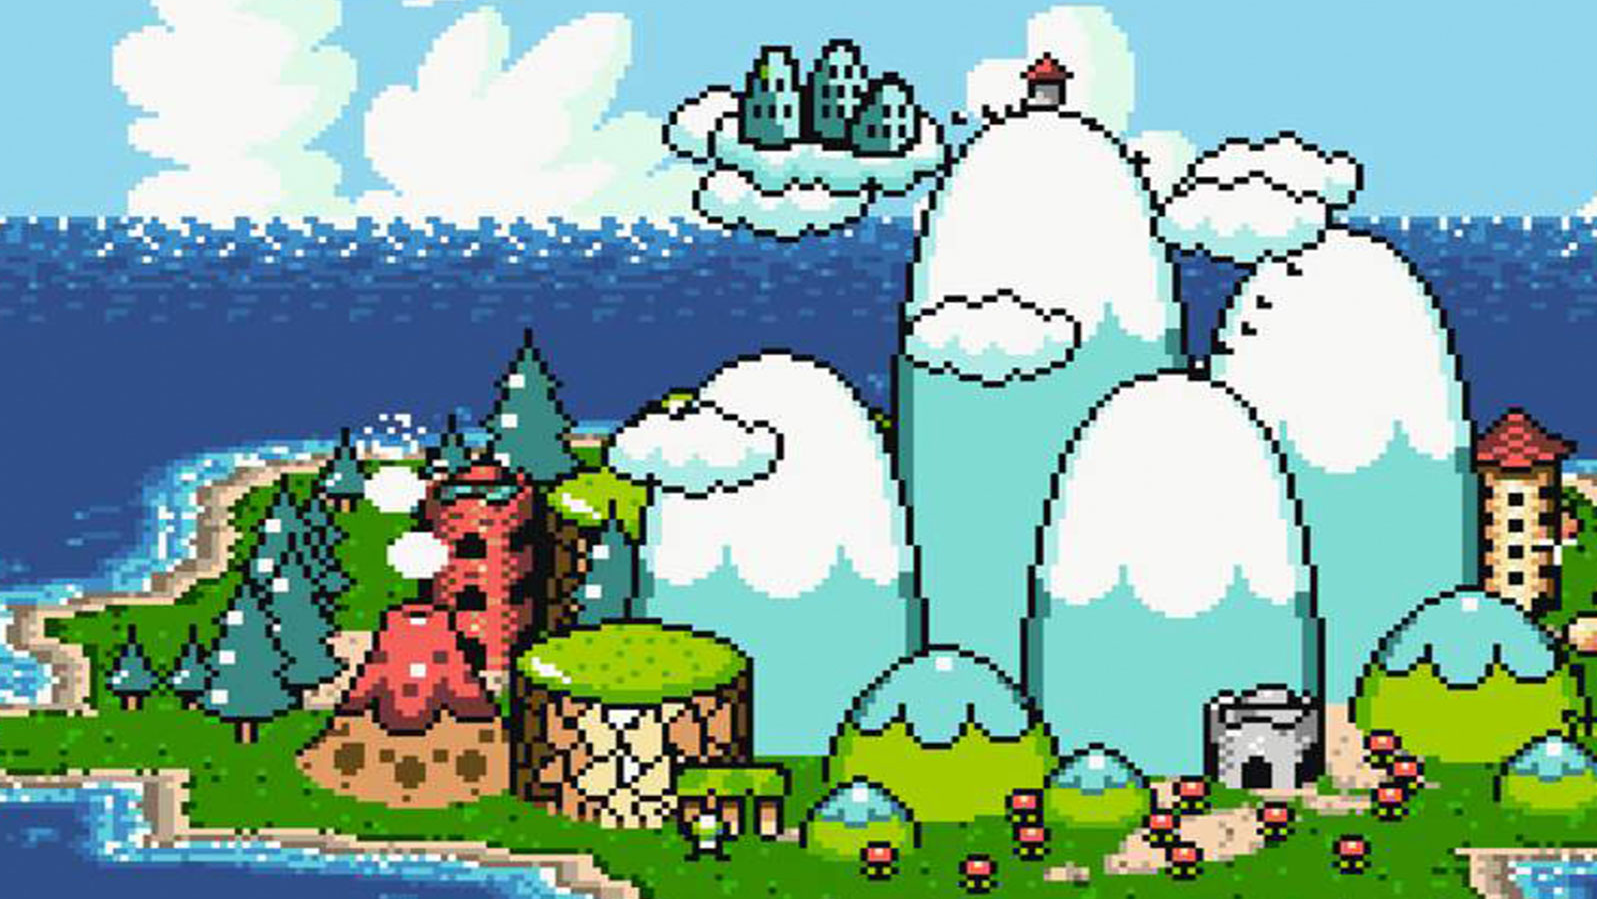 Mario yoshi island 2. Марио Йоши ворлд 2 остров. Марио Исланд. Super Mario World 2 - Yoshi's Island Snes. Super Mario Yoshi Island.